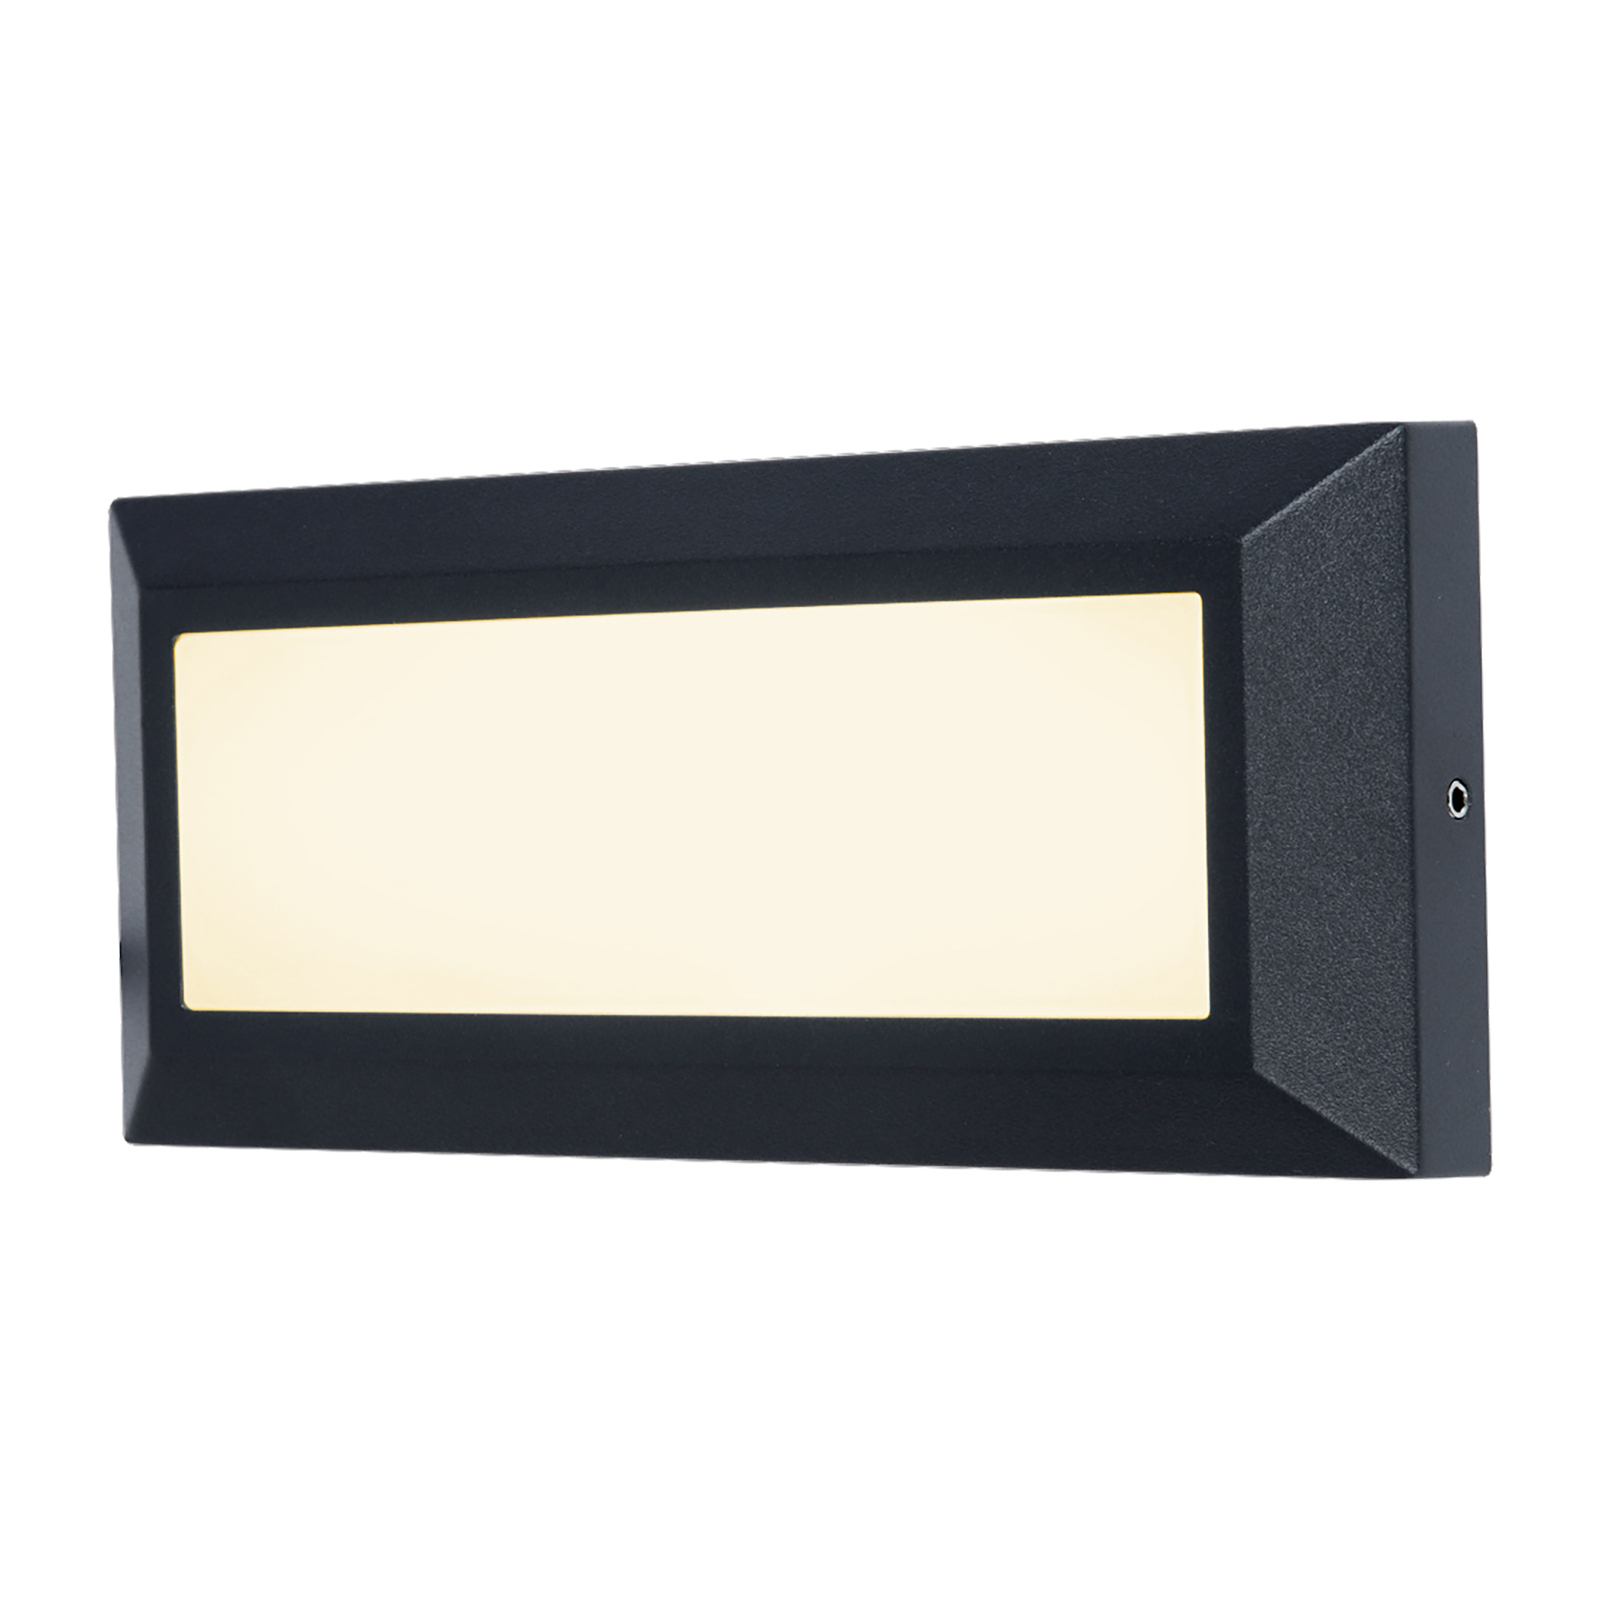 LED-Außenwandlampe Helena, frontal 23 cm schwarz